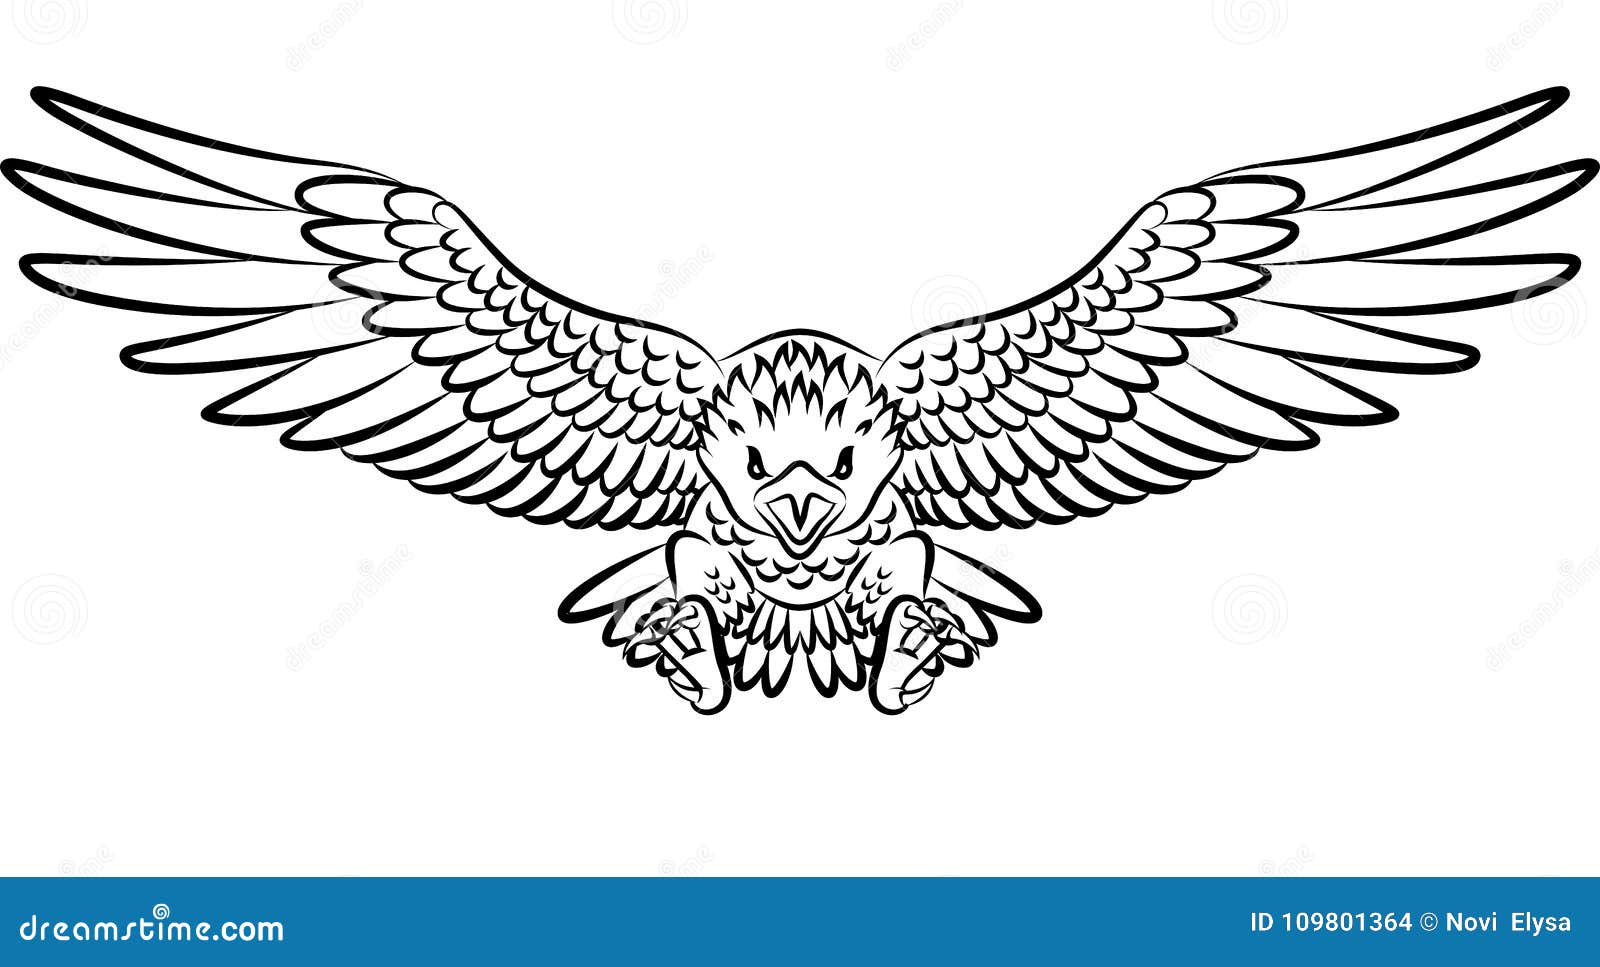 Premium Vector  Hand drawn eagle tribal tattoo black and white illustration